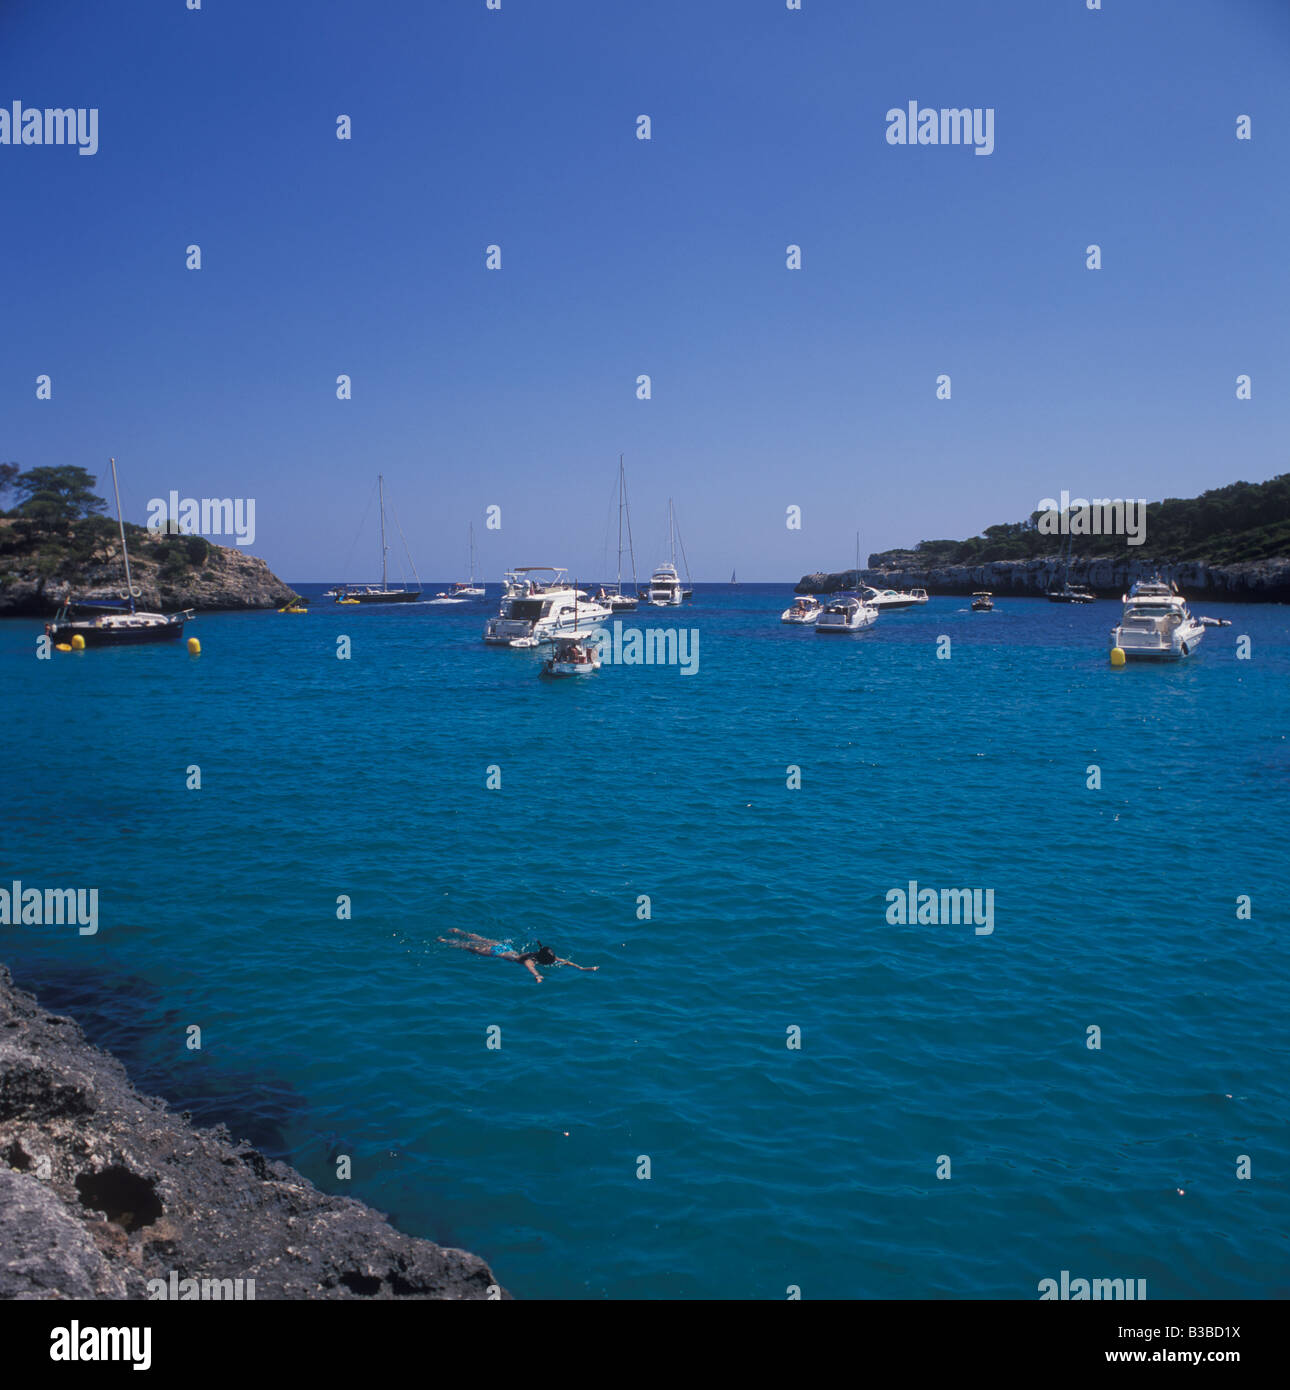 Scene in Cala Mondrago - swimmer + boats and yachts at anchor looking seawards - near Cala D'Or, East Coast Mallorca. Stock Photo